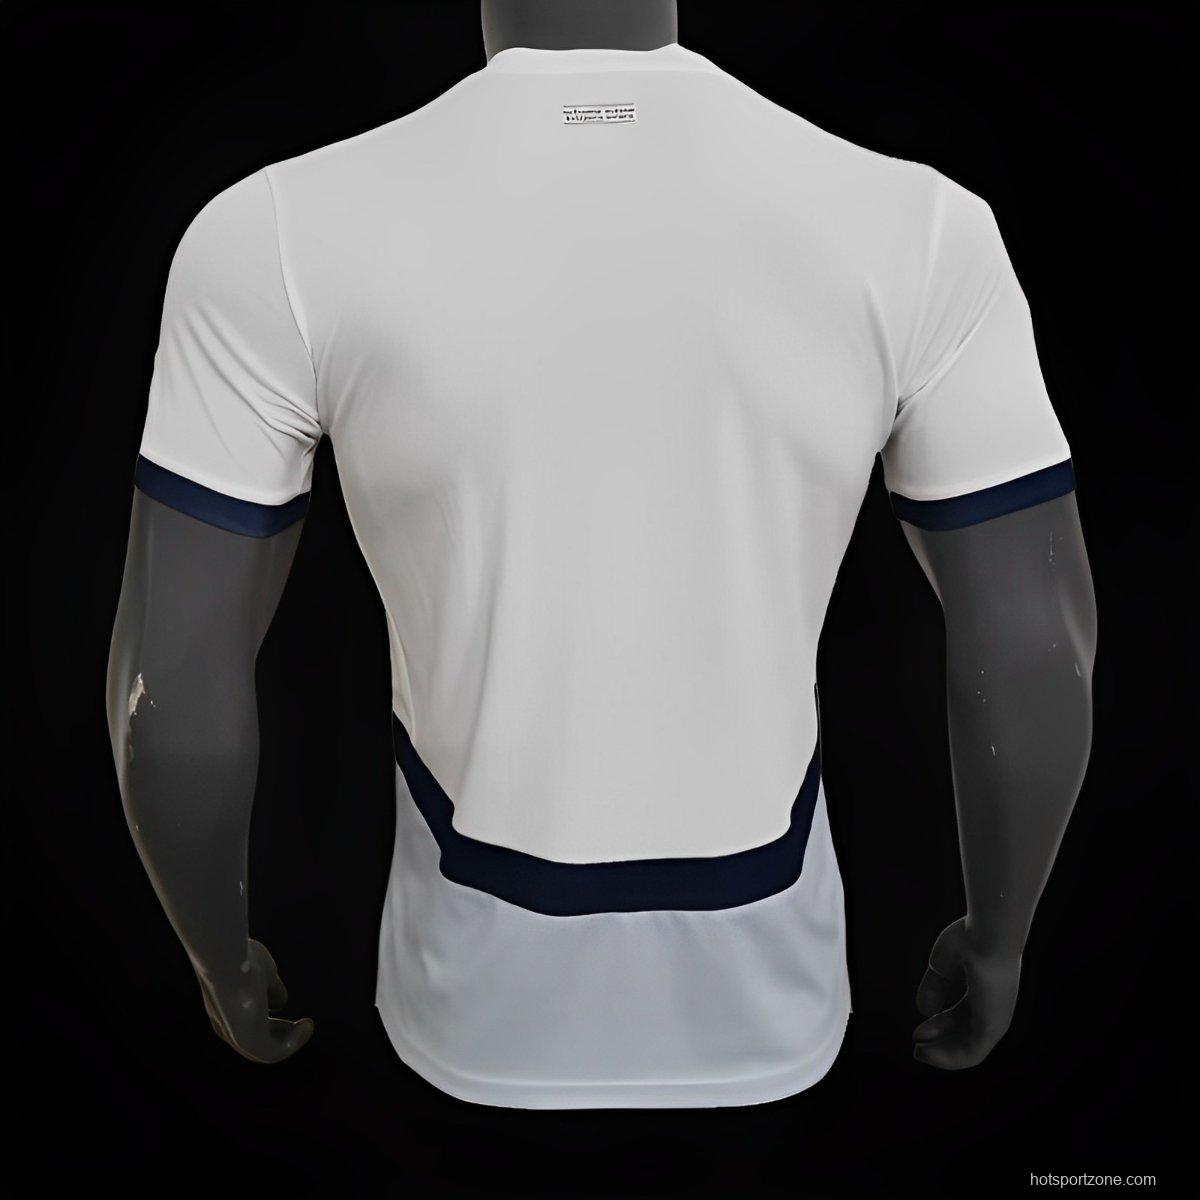 Player Version 24/25 Tottenham Hotspur x Jordan Concept Jersey